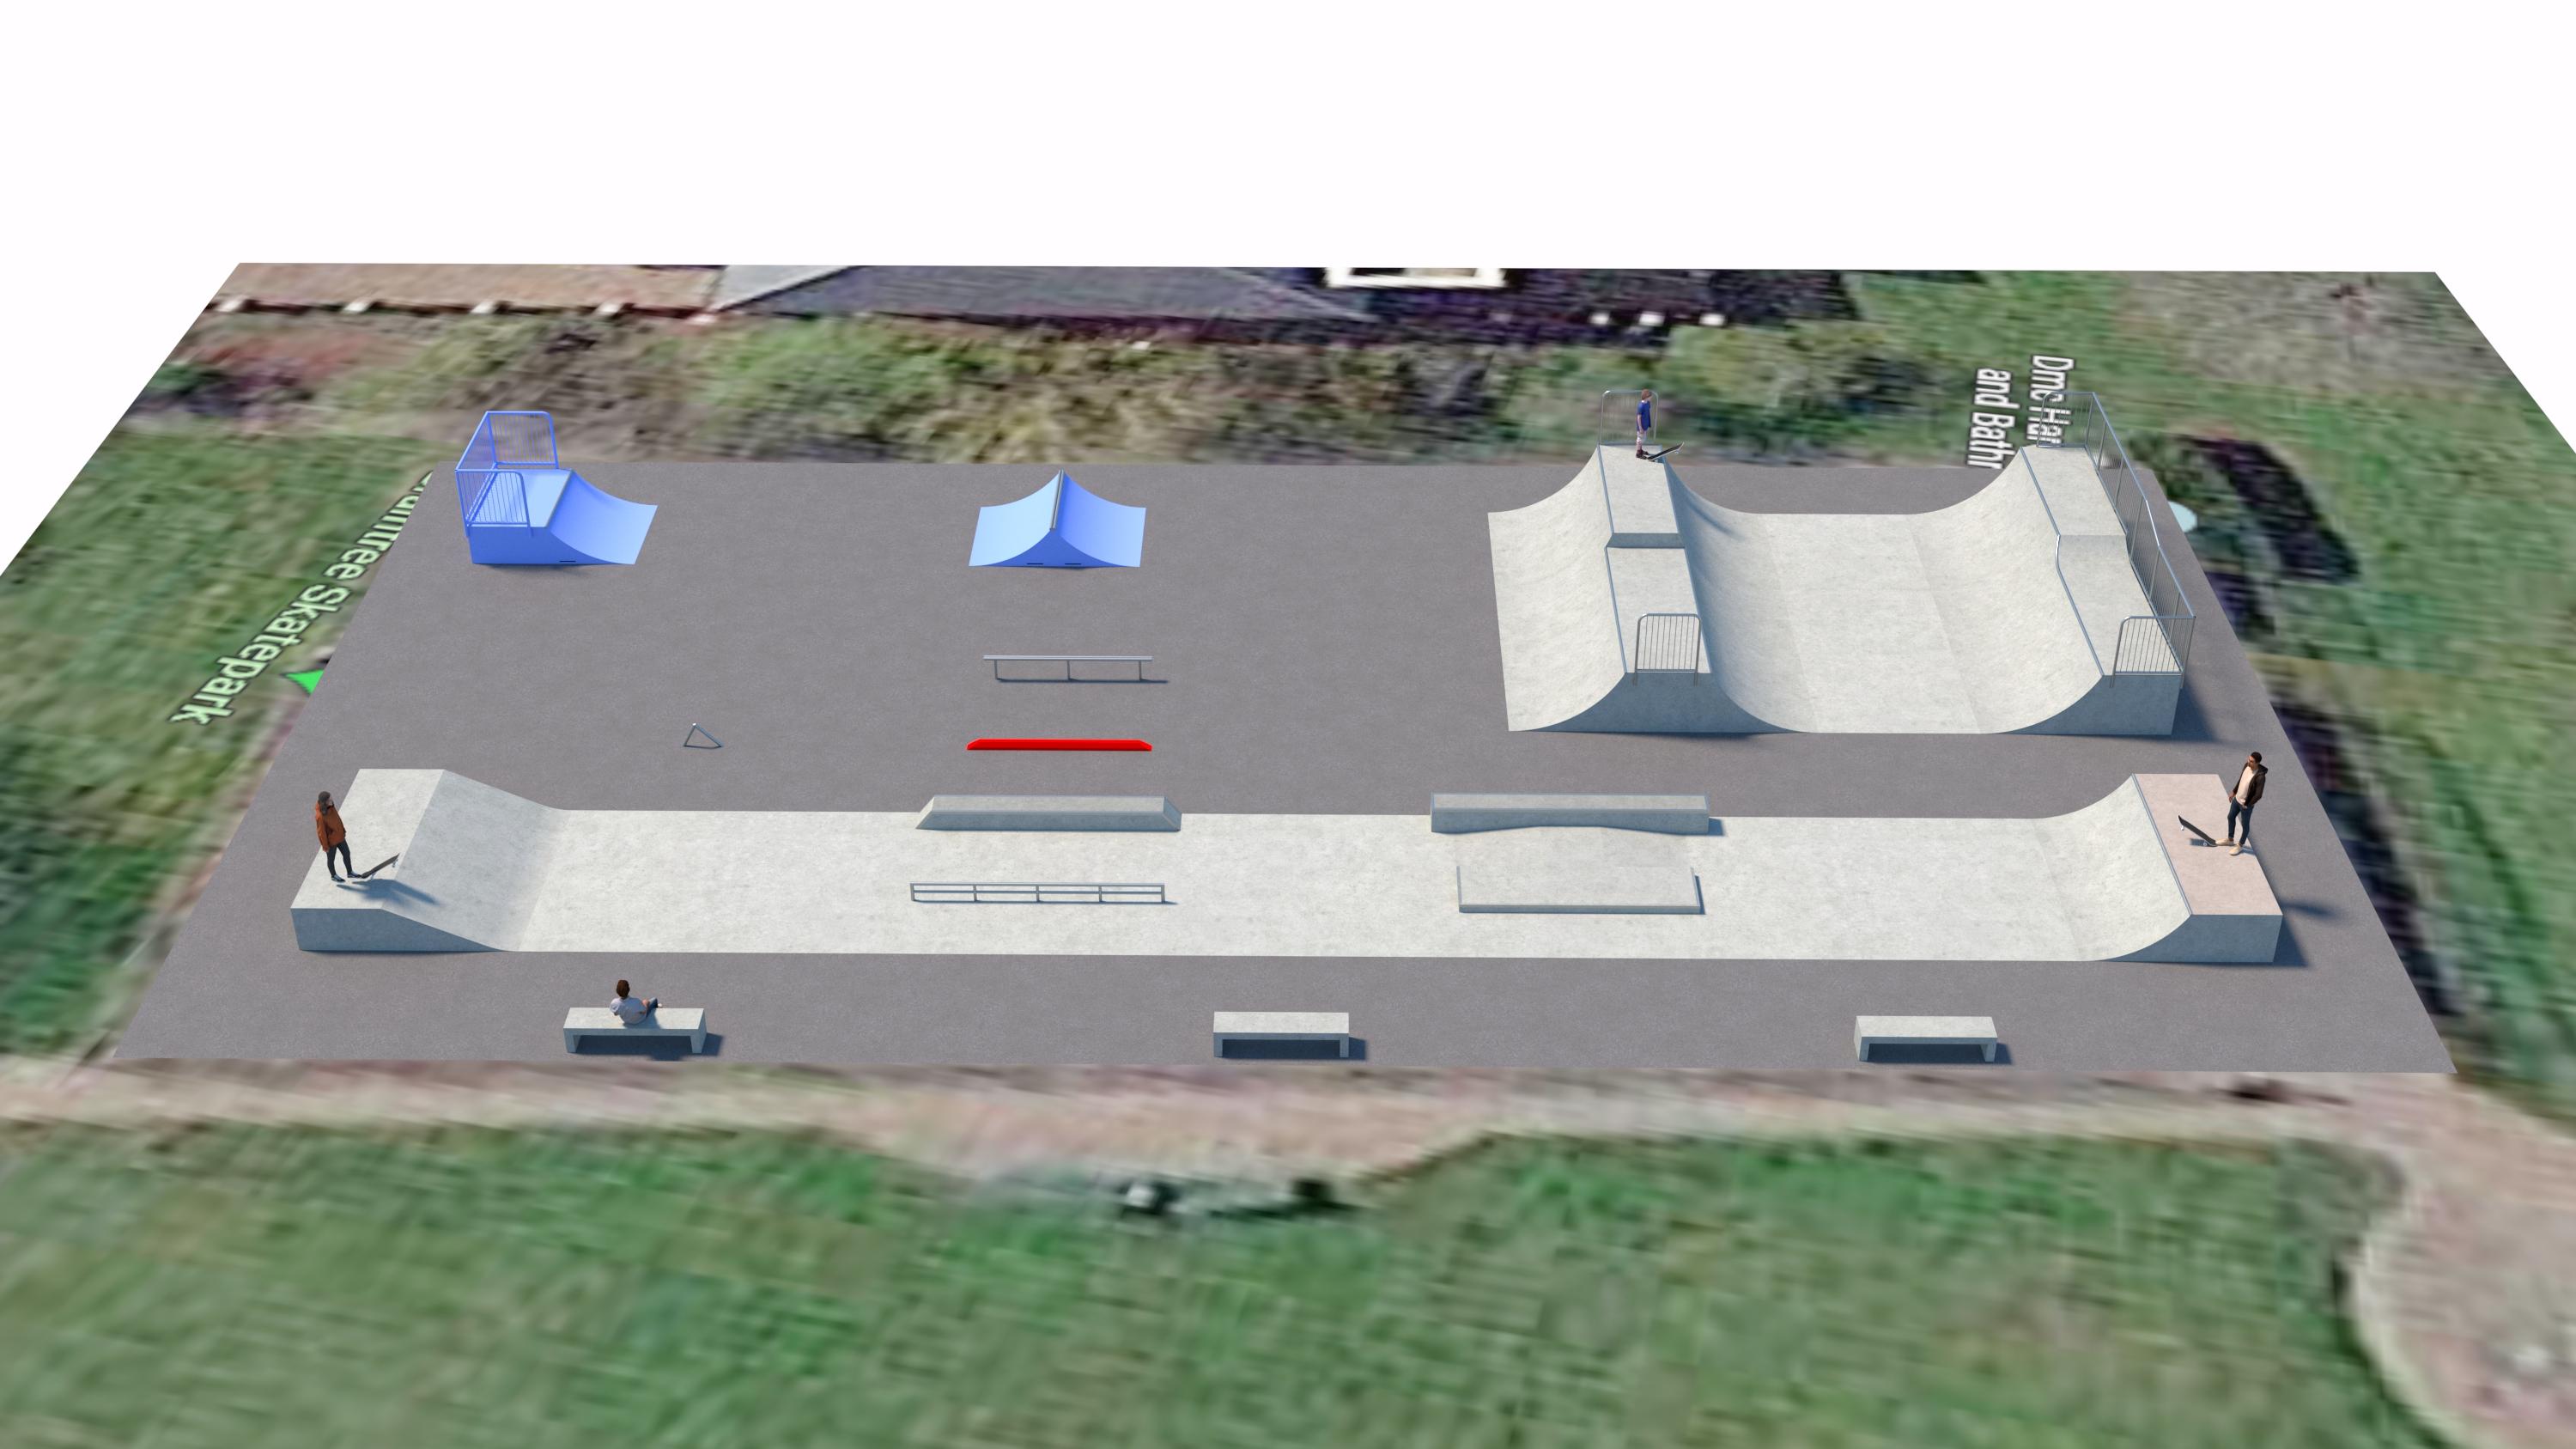 image shows artist's drawing of new skatepark design concept